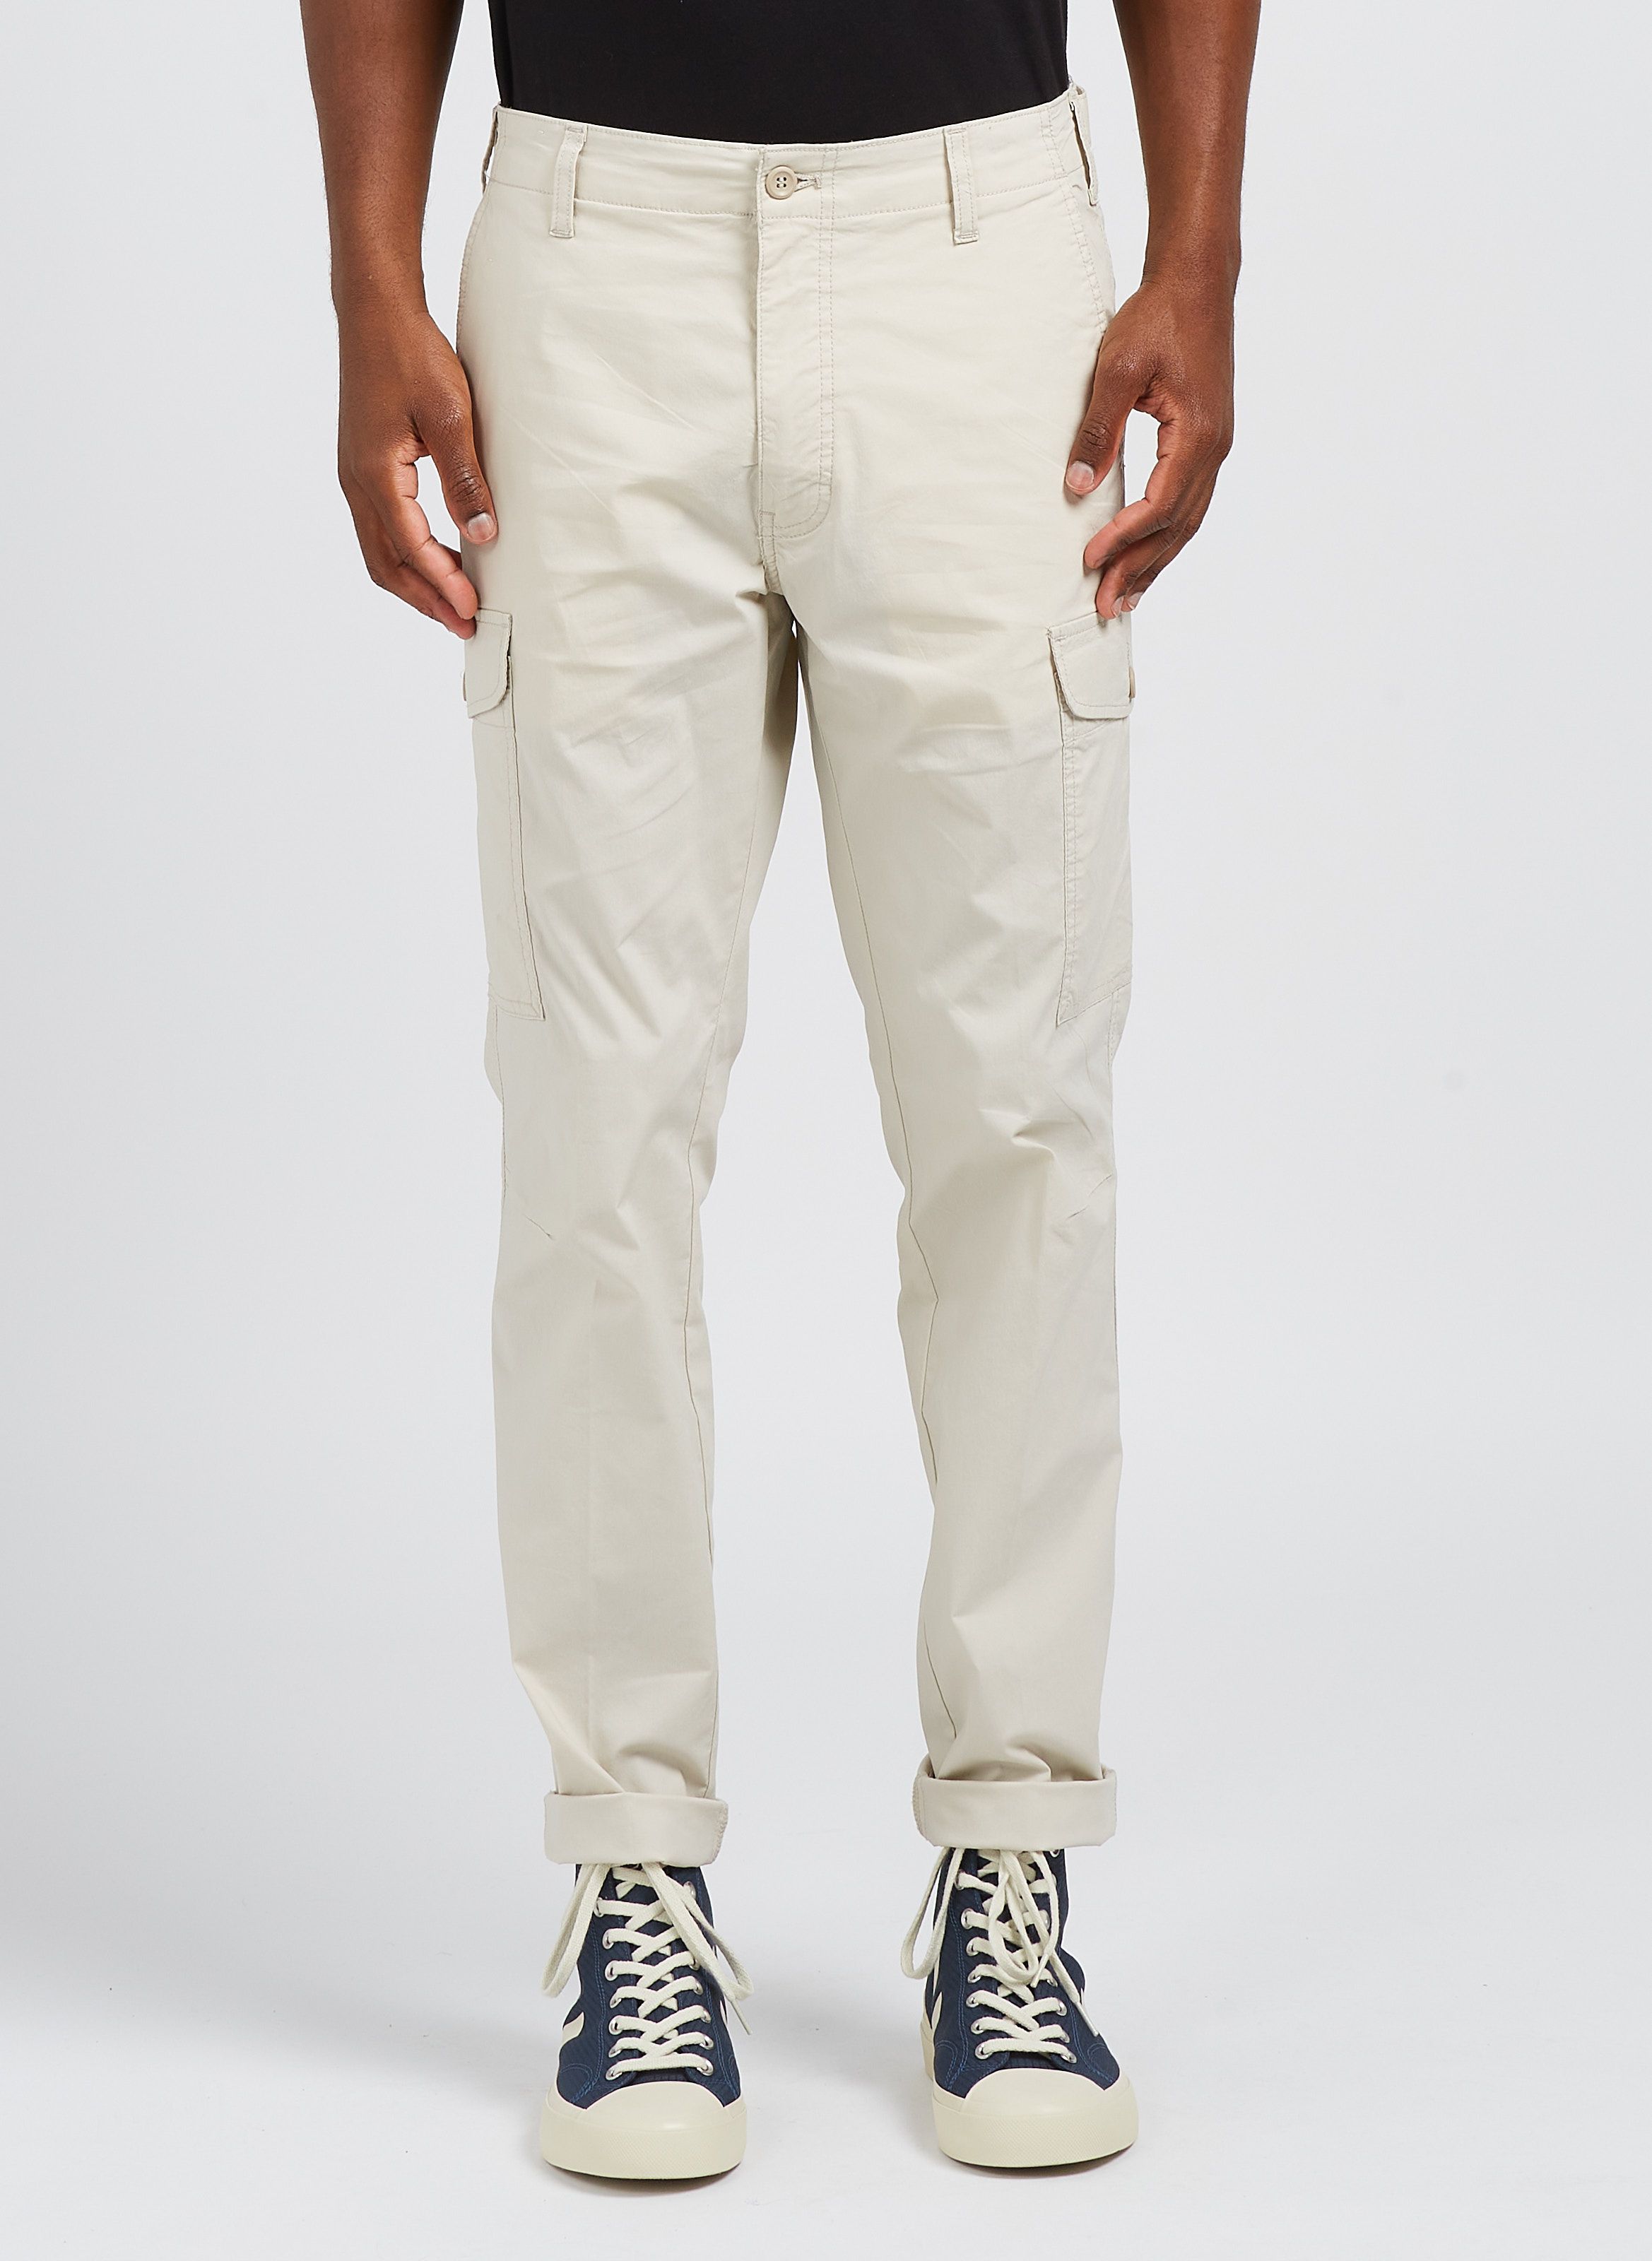 Dockers Men's Slim Fit Trousers - Charcoal Gray 32x32 : Target